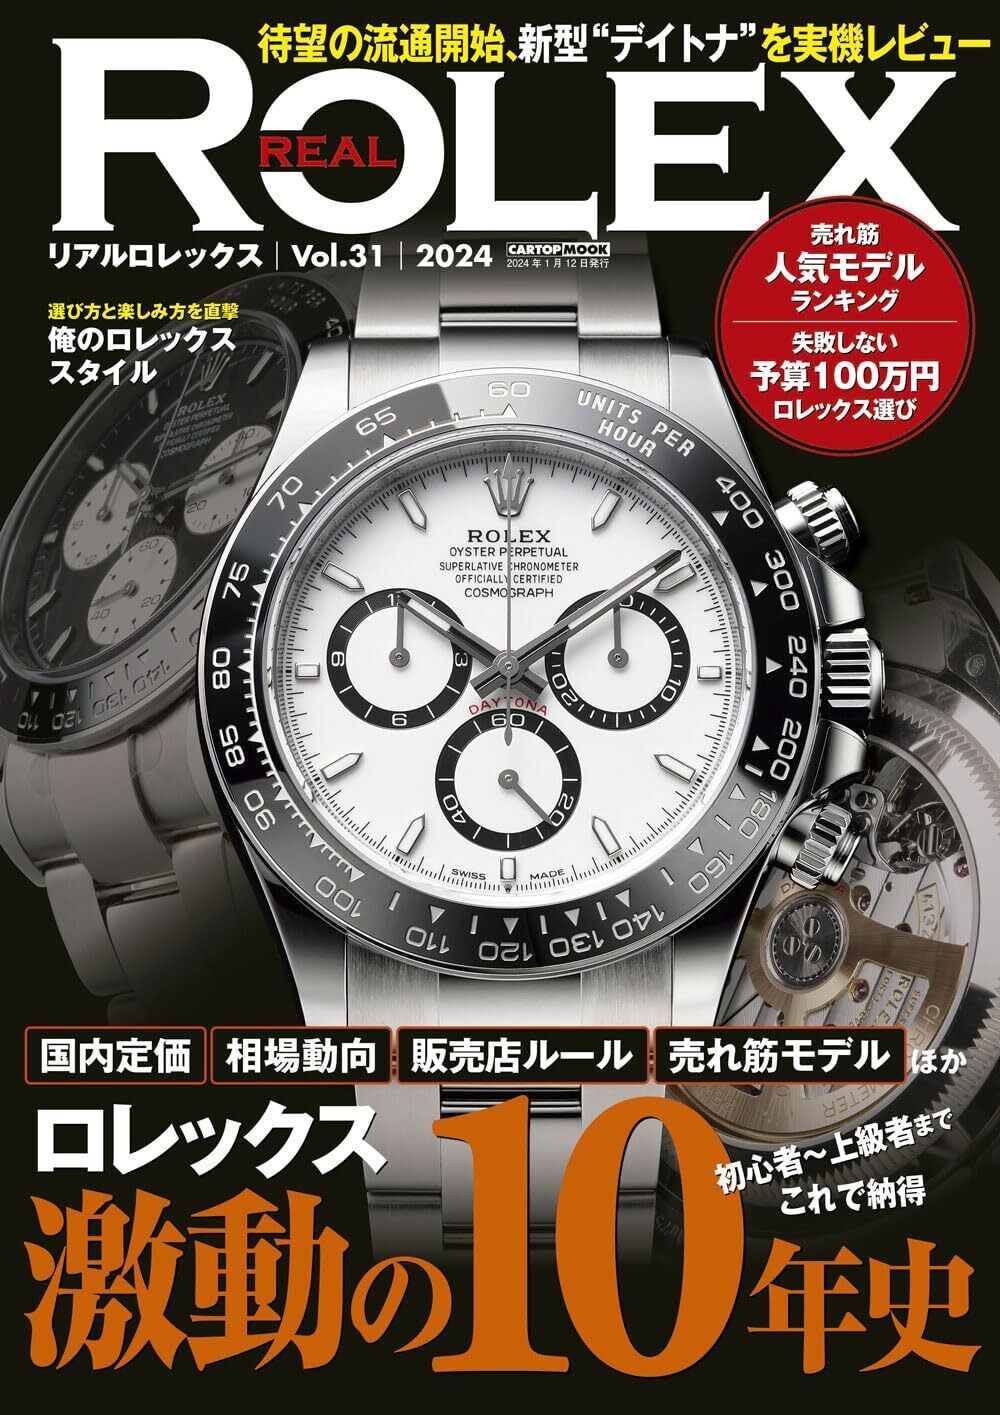 REAL ROLEX vol.31 2024 Magazine Japan Watch Fashion Daytona Explorer Antique